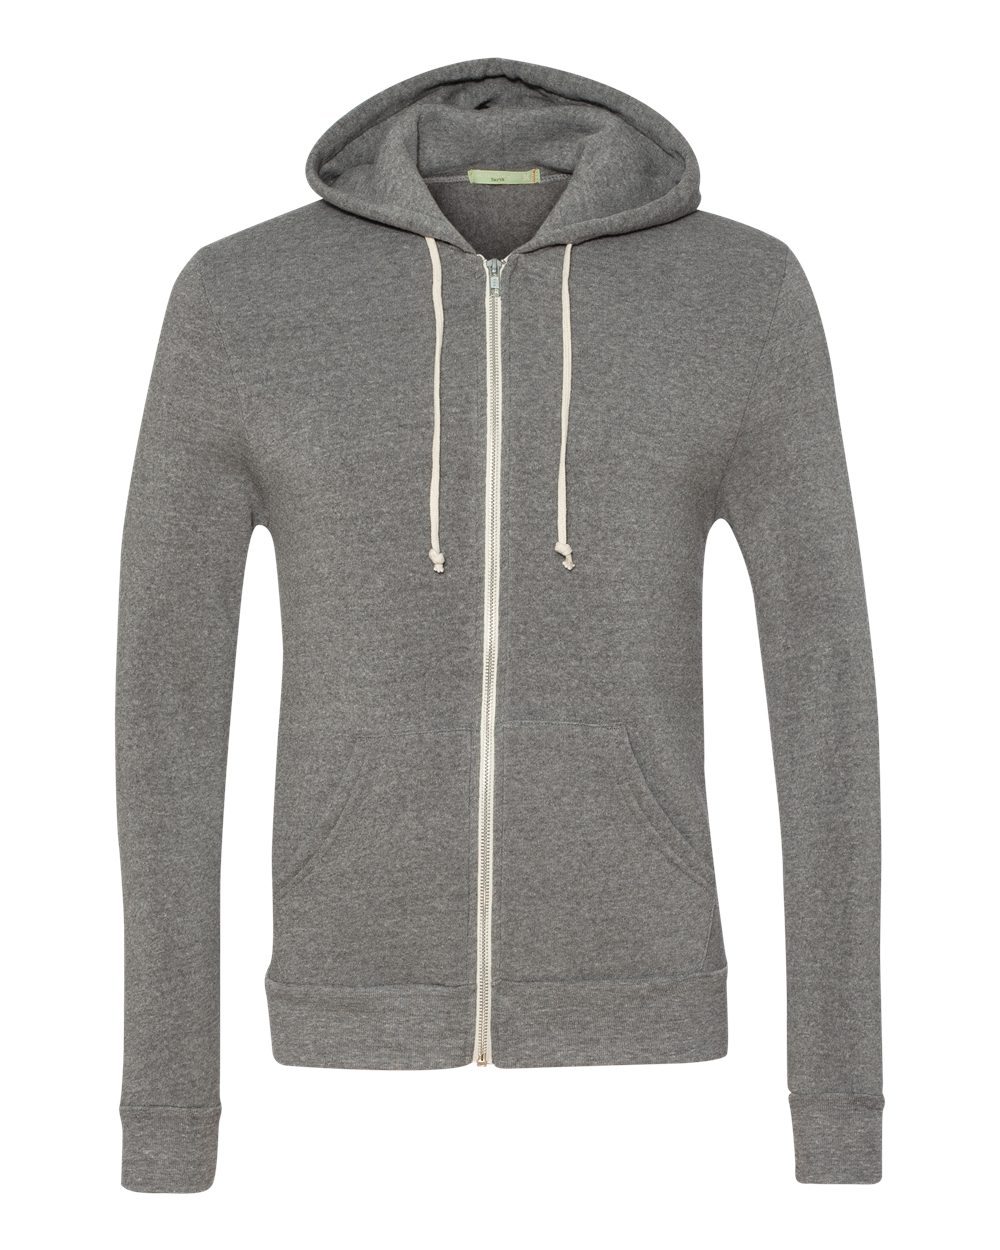 Rocky Eco-Fleece Full-Zip Hooded Sweatshirt-Alternative